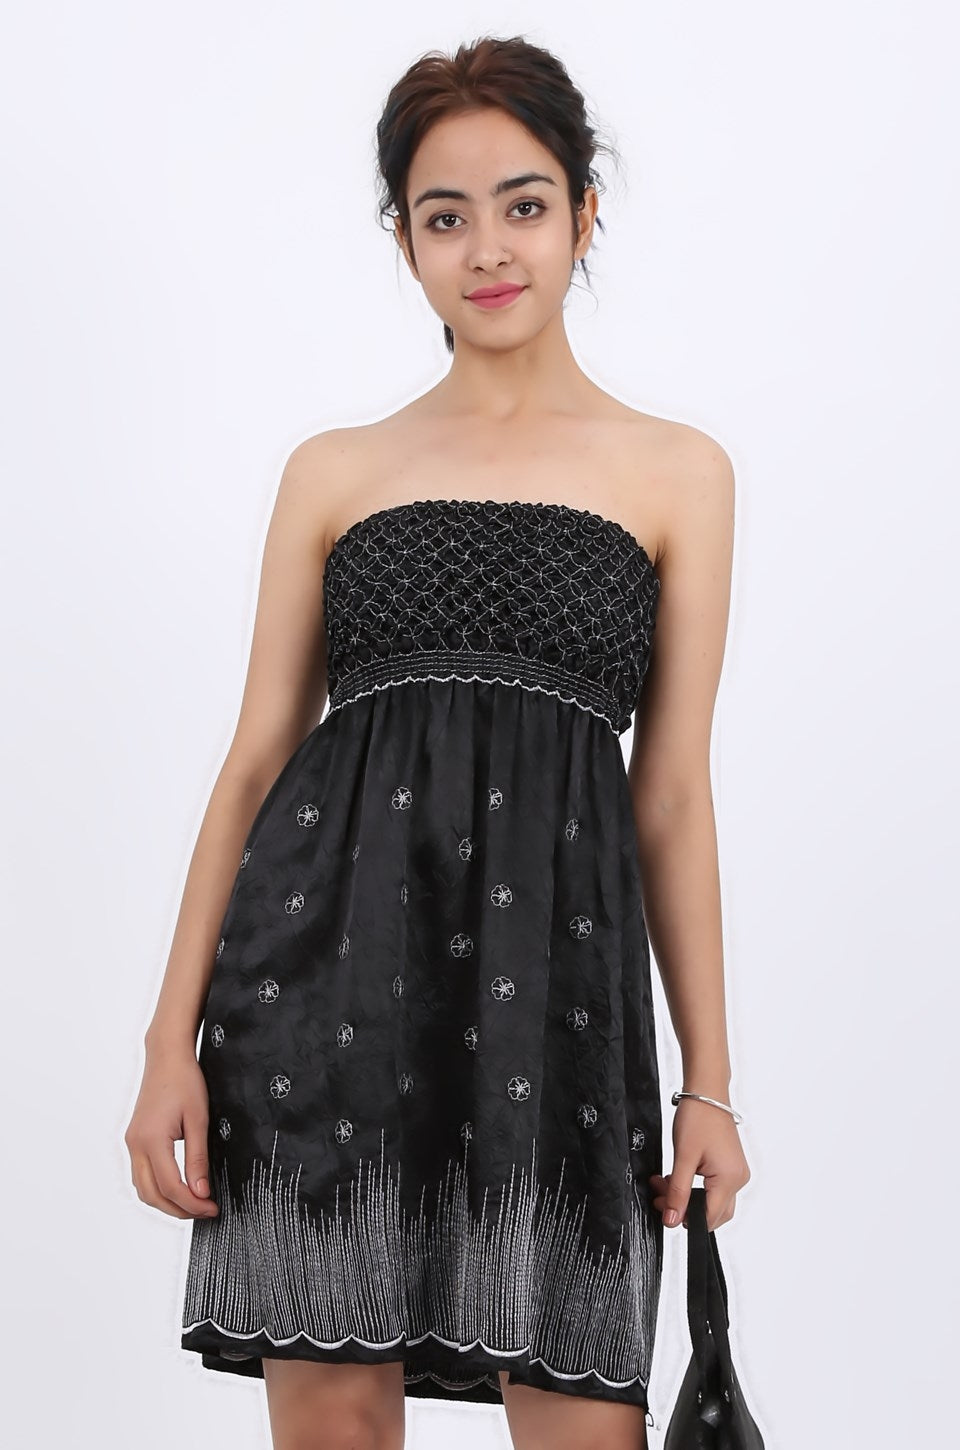 MISS PINKI Maya boobtube embroidery satin dress in black